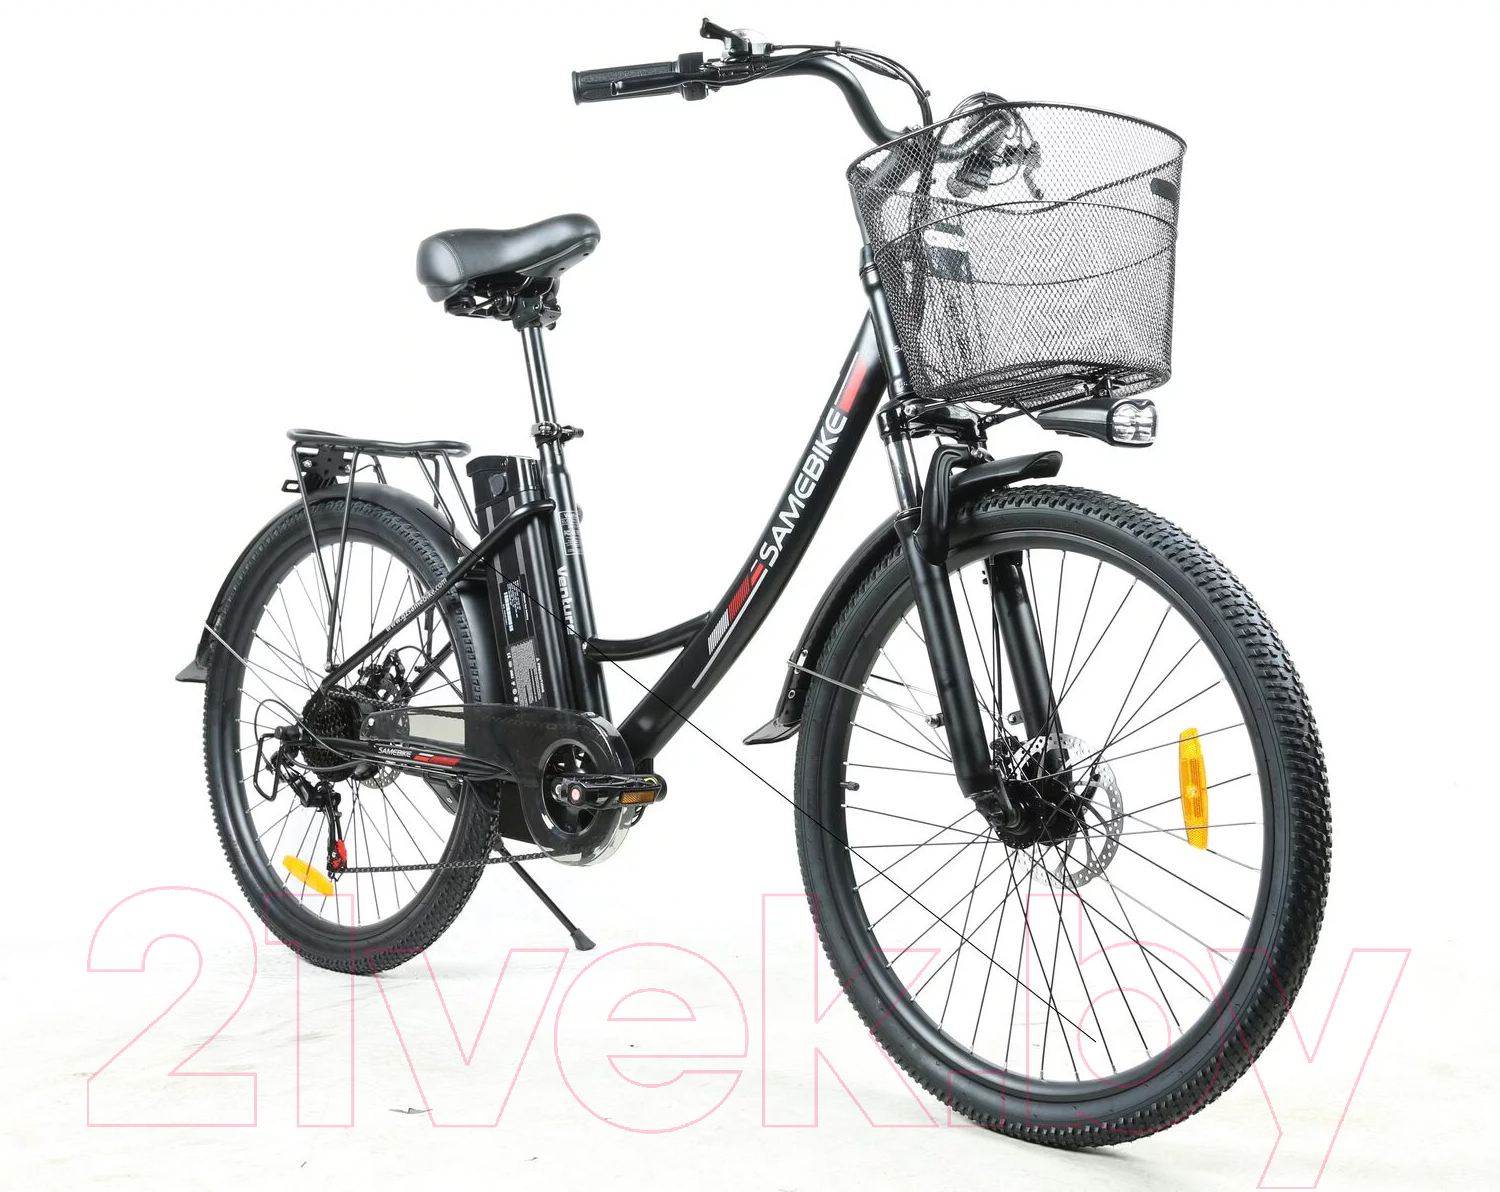 Электровелосипед Samebike SB-VENTURE250